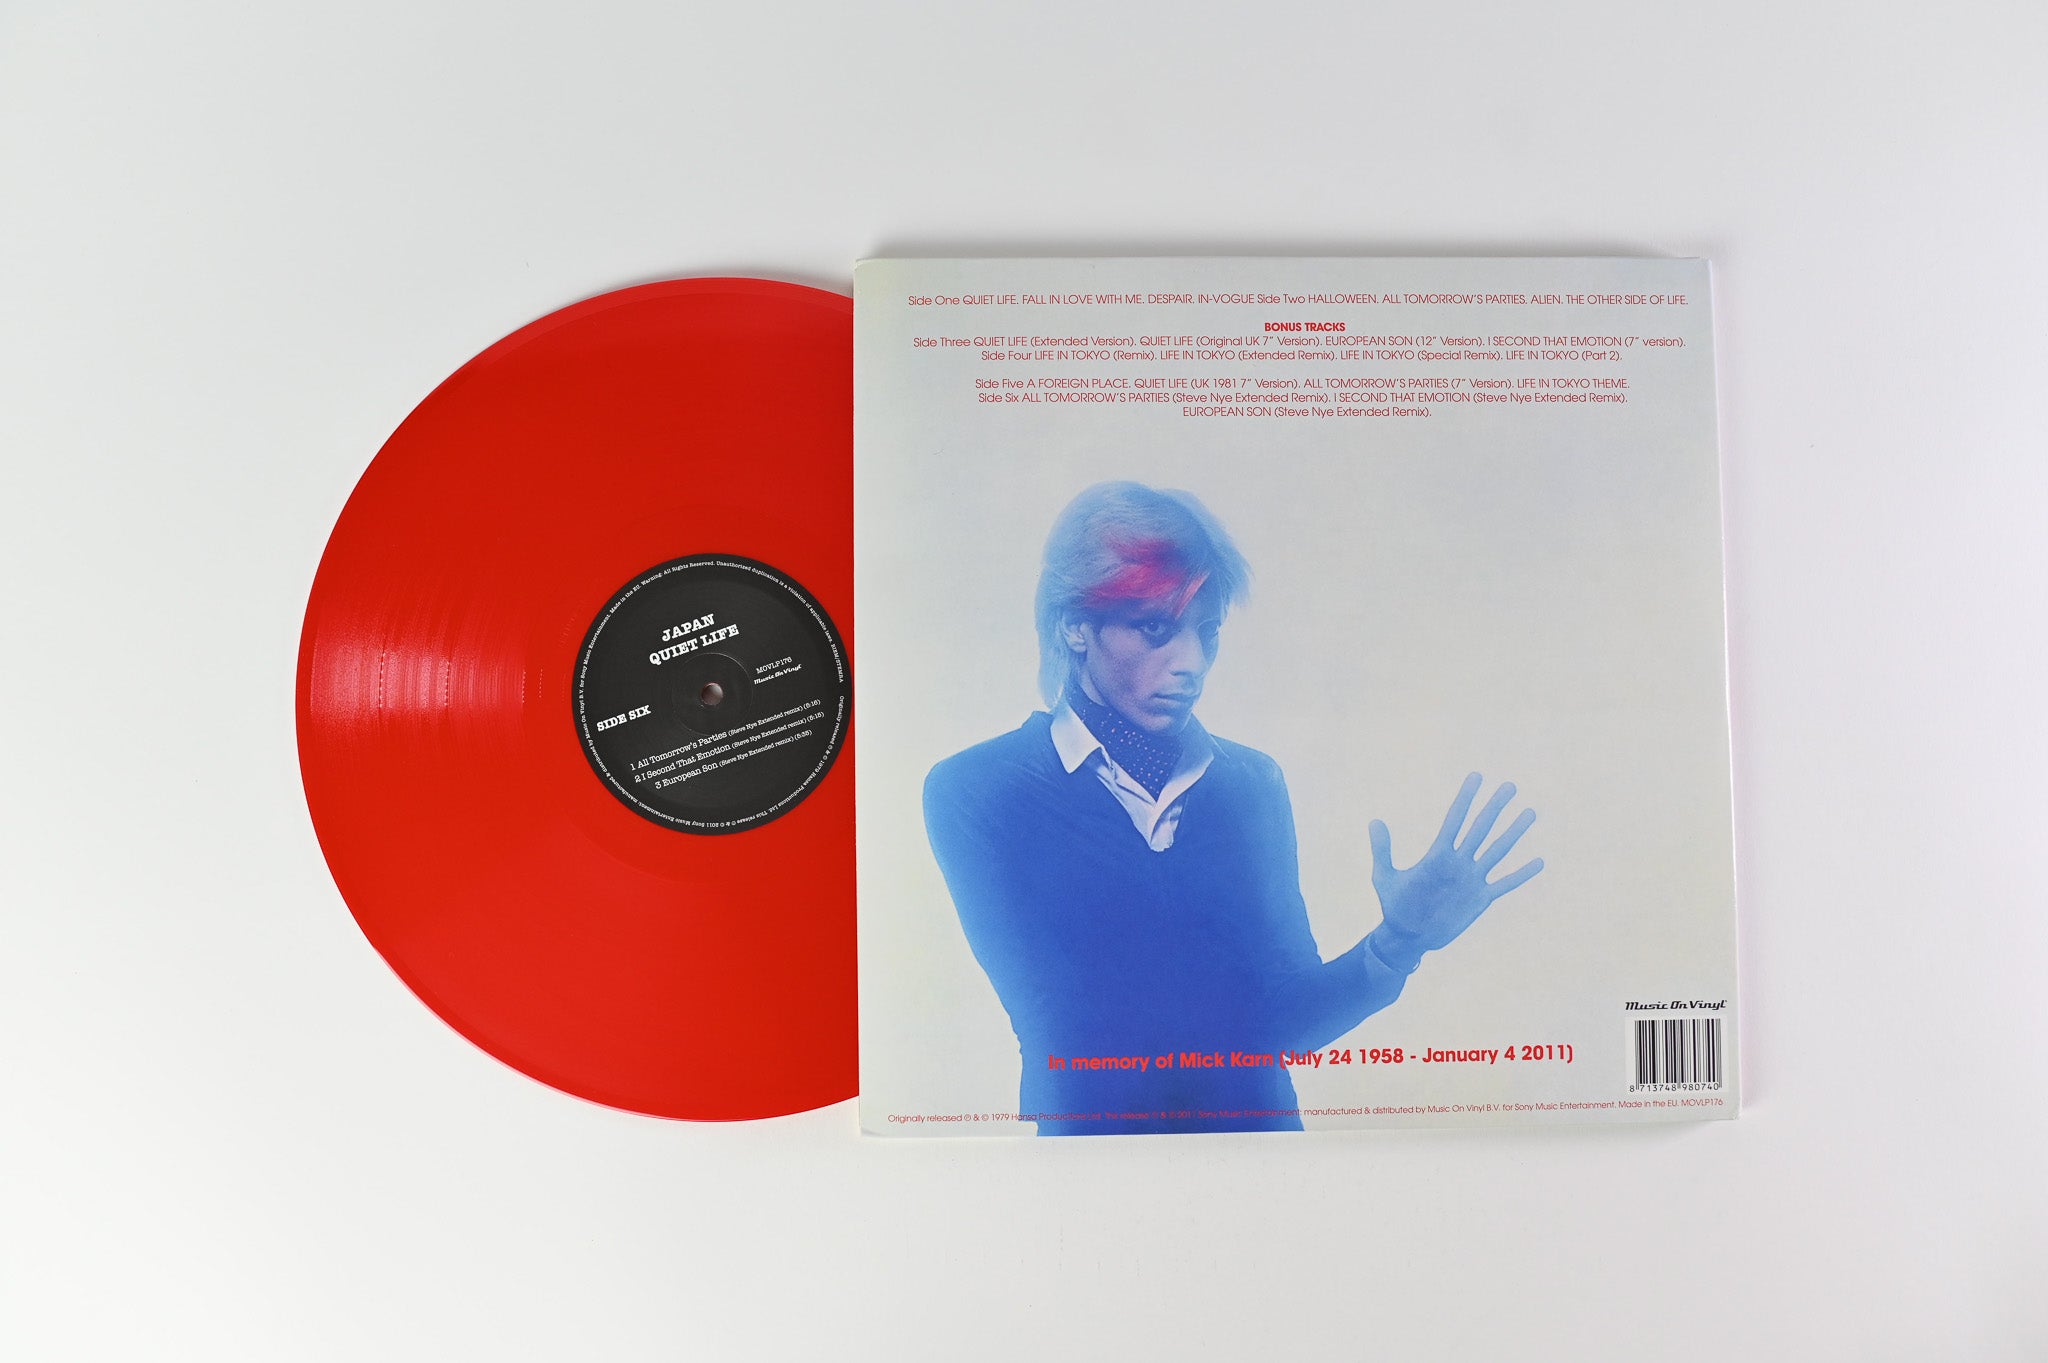 Japan - Quiet Life on Music On Vinyl Ltd Red Vinyl Reissue